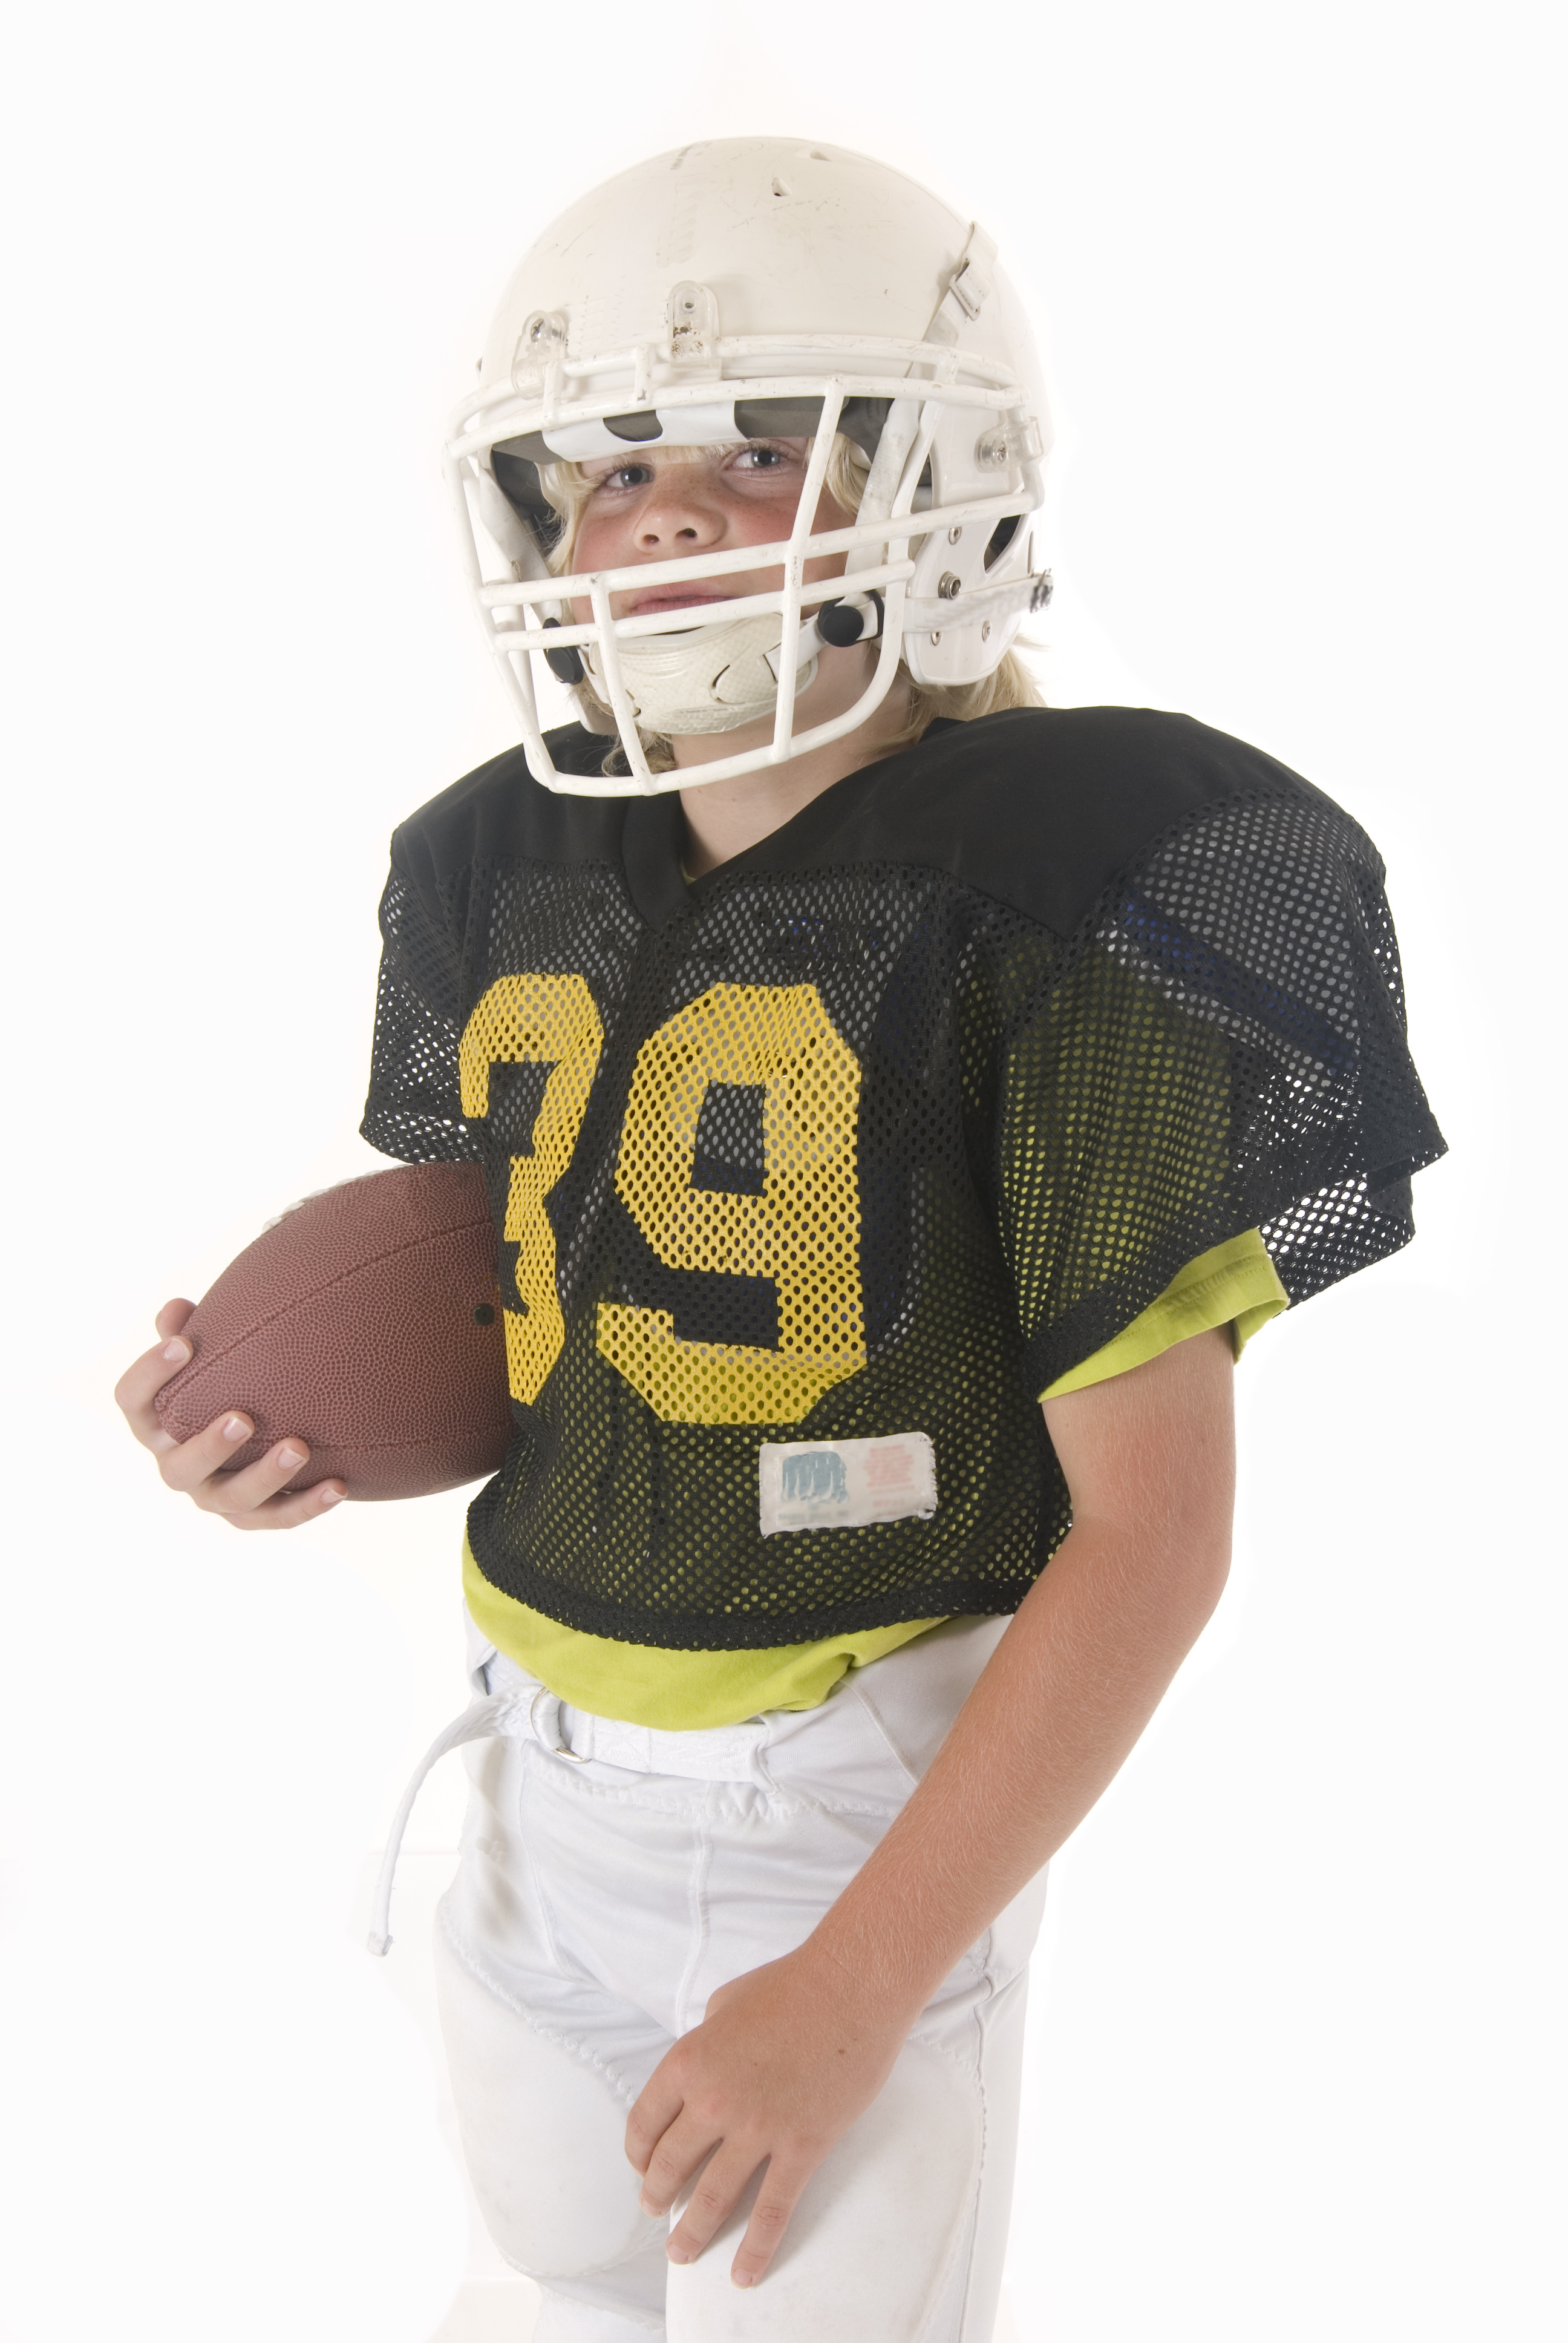 Boy fullback holding American football in uniform